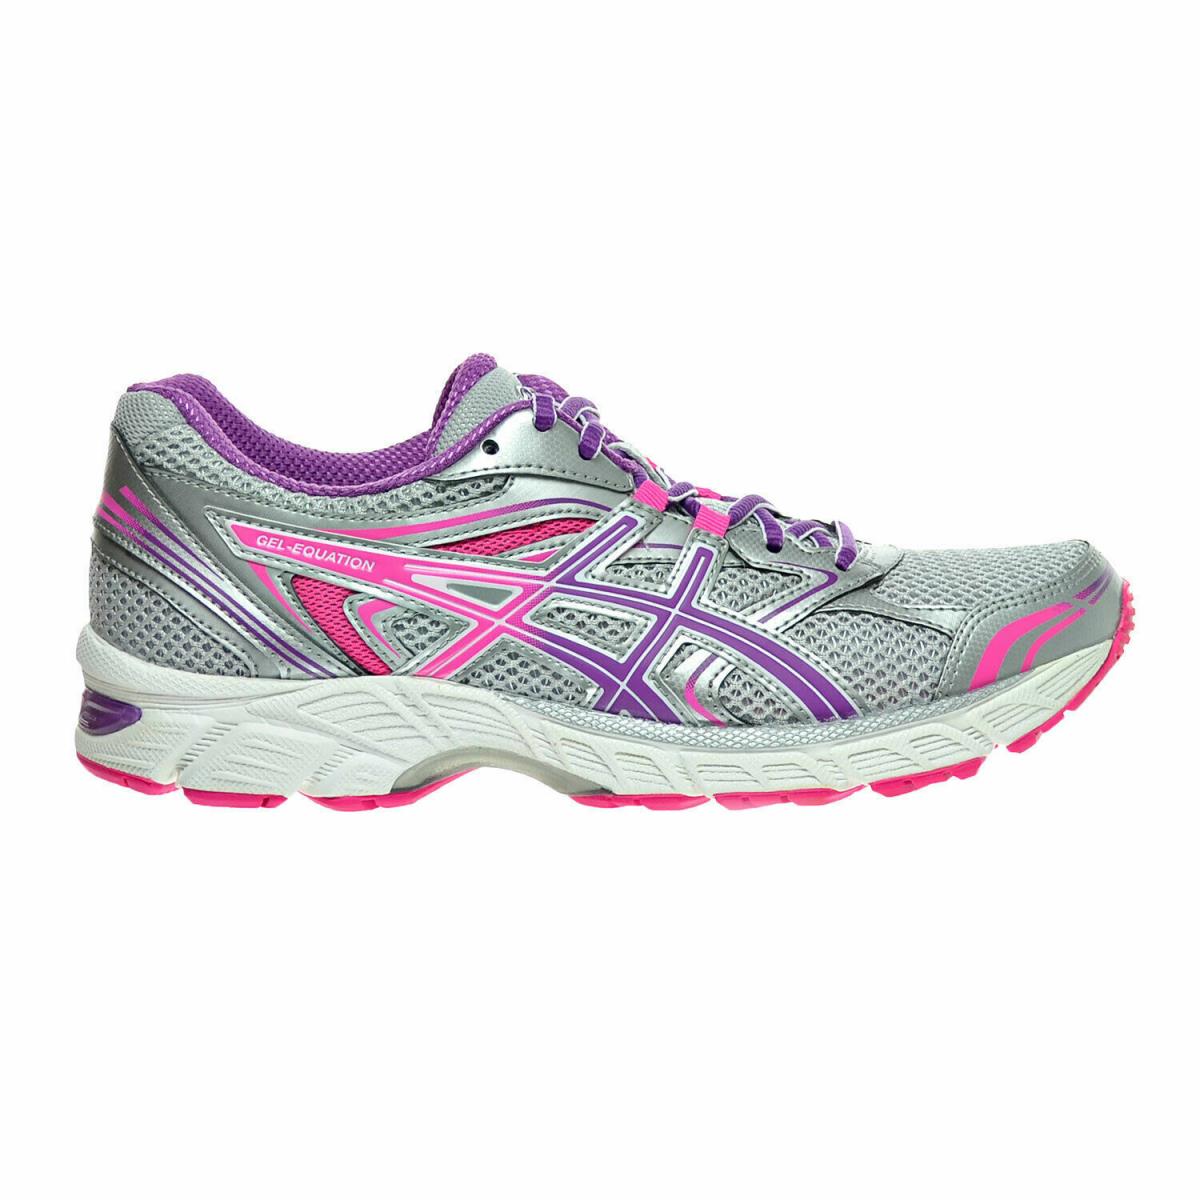 Asics Women`s Gel Equation 8 Running Shoes Silver/grape/pink Size 5 - Silver/Grape/Pink